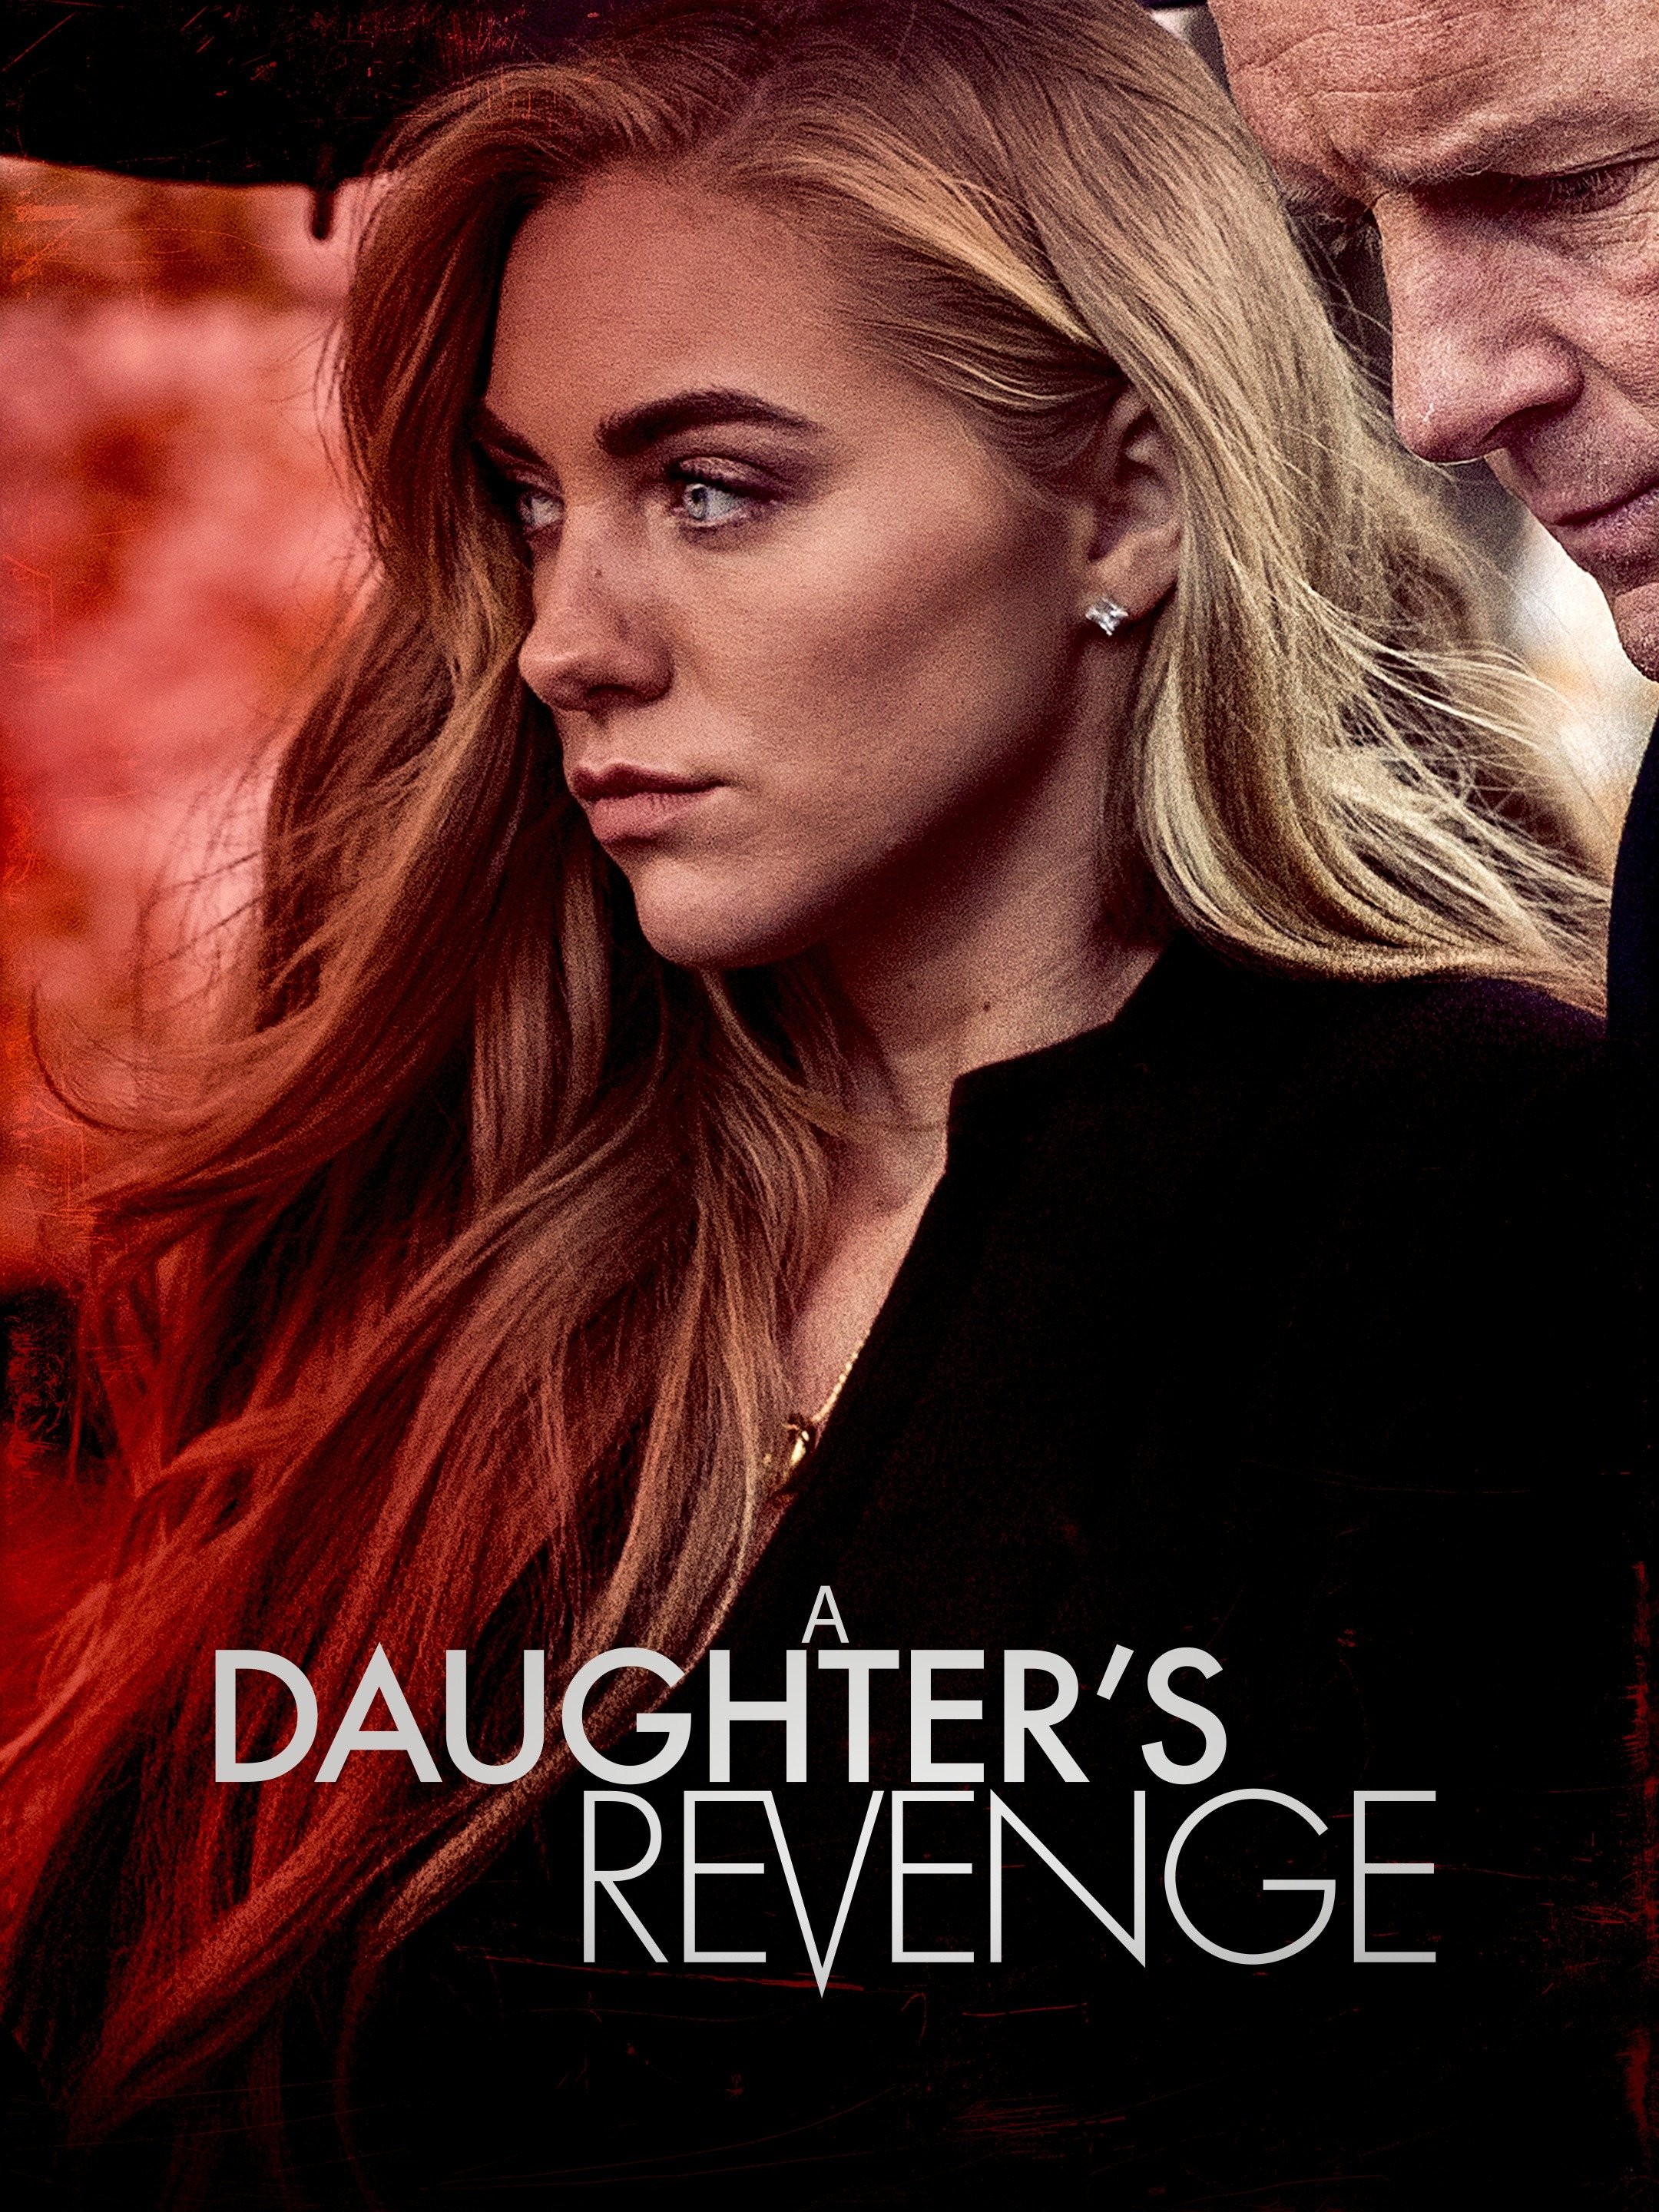 Movie a daughter's revenge